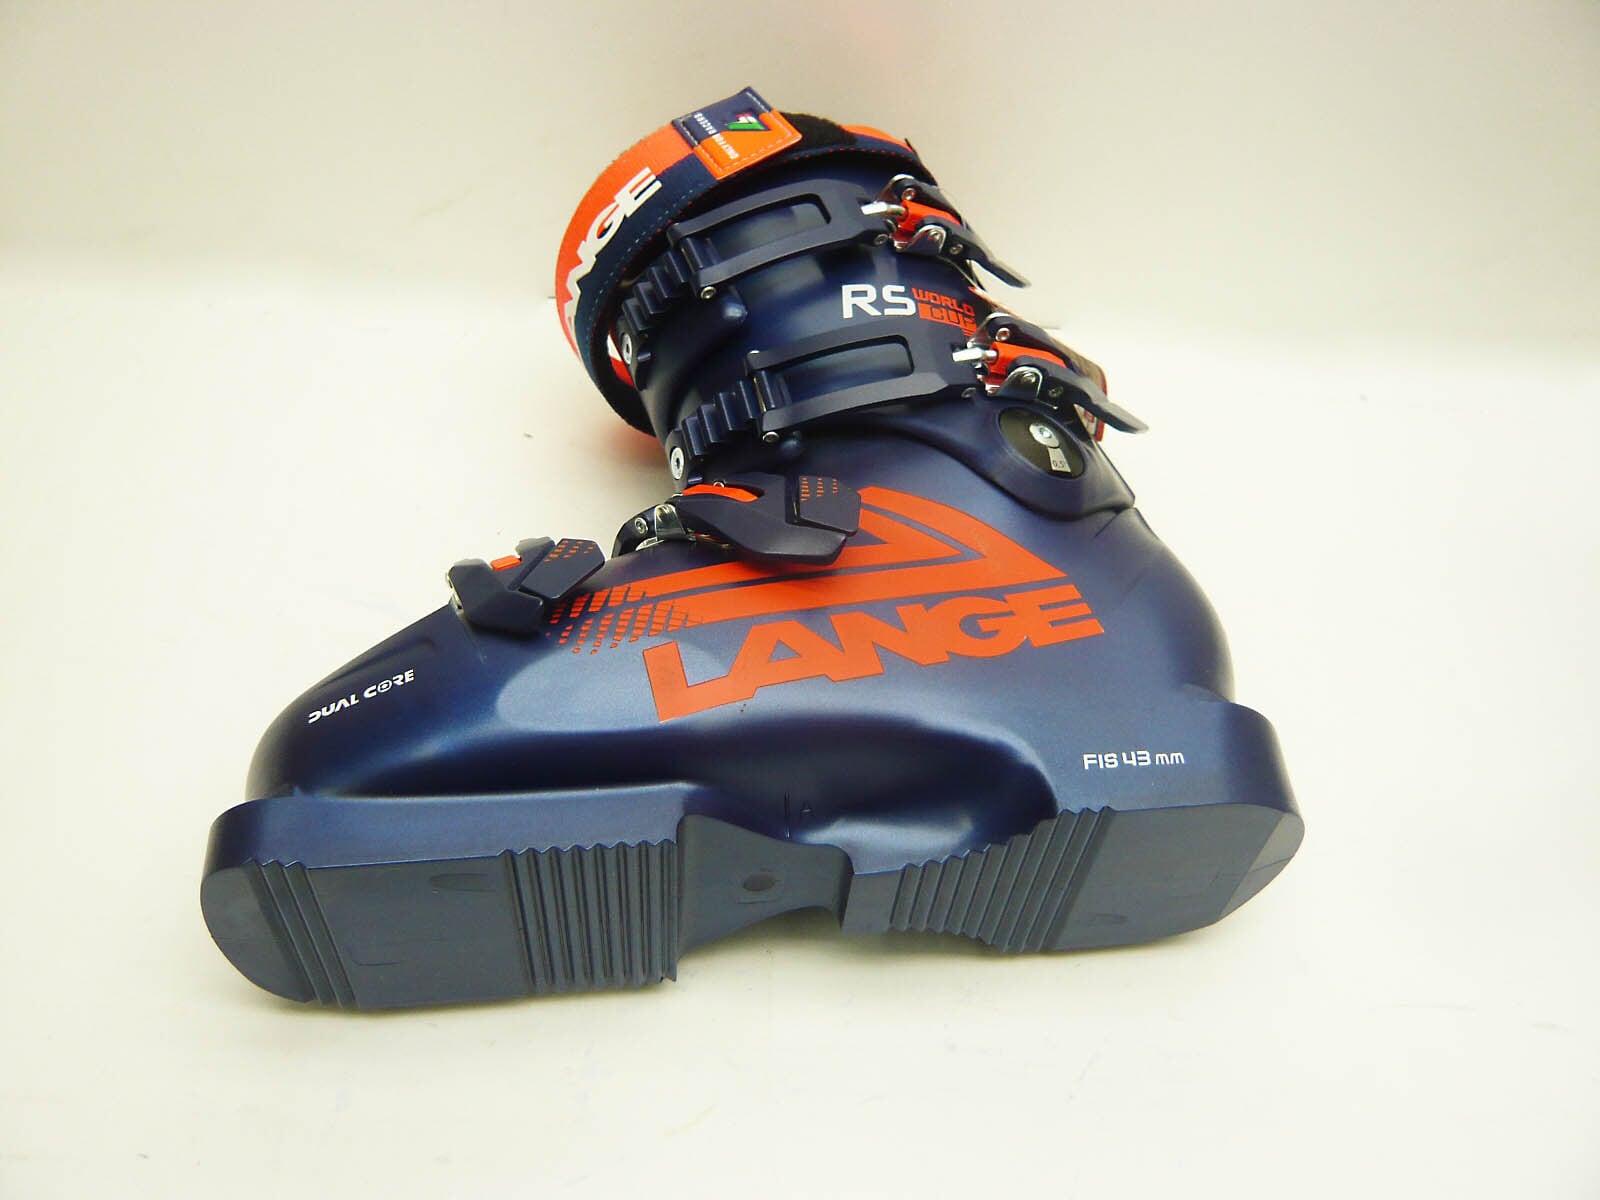 LANGE ラング スキーブーツ20.5cm ブーツ ソフトケース付き スキー靴